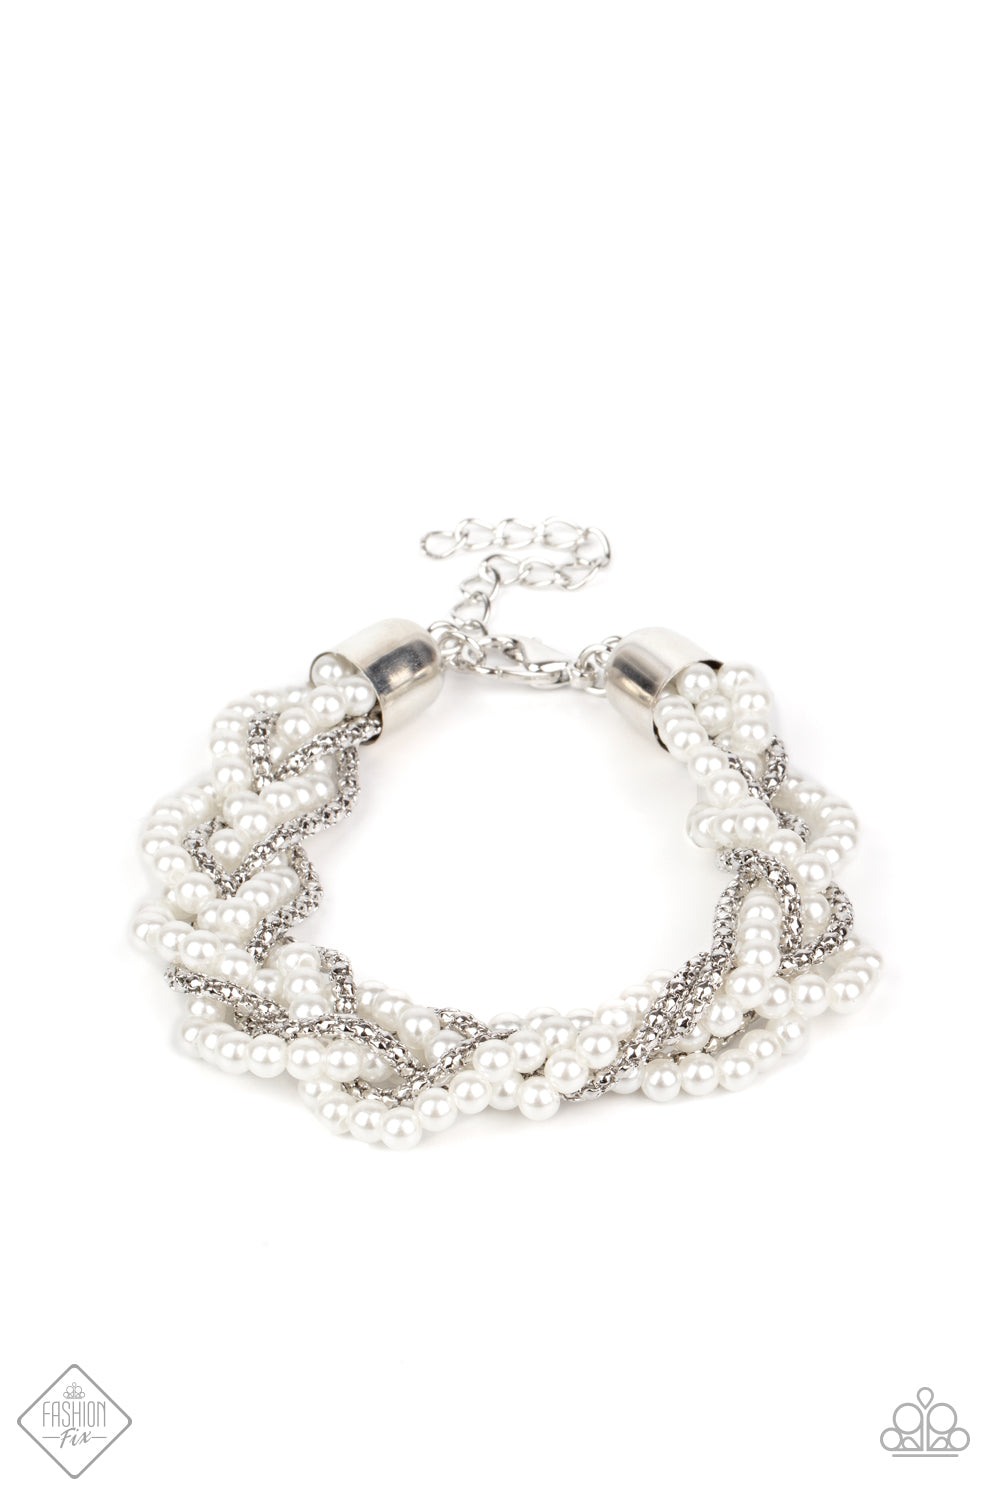 Vintage Variation - White Necklace (FFA-0321) freeshipping - JewLz4u Gemstone Gallery